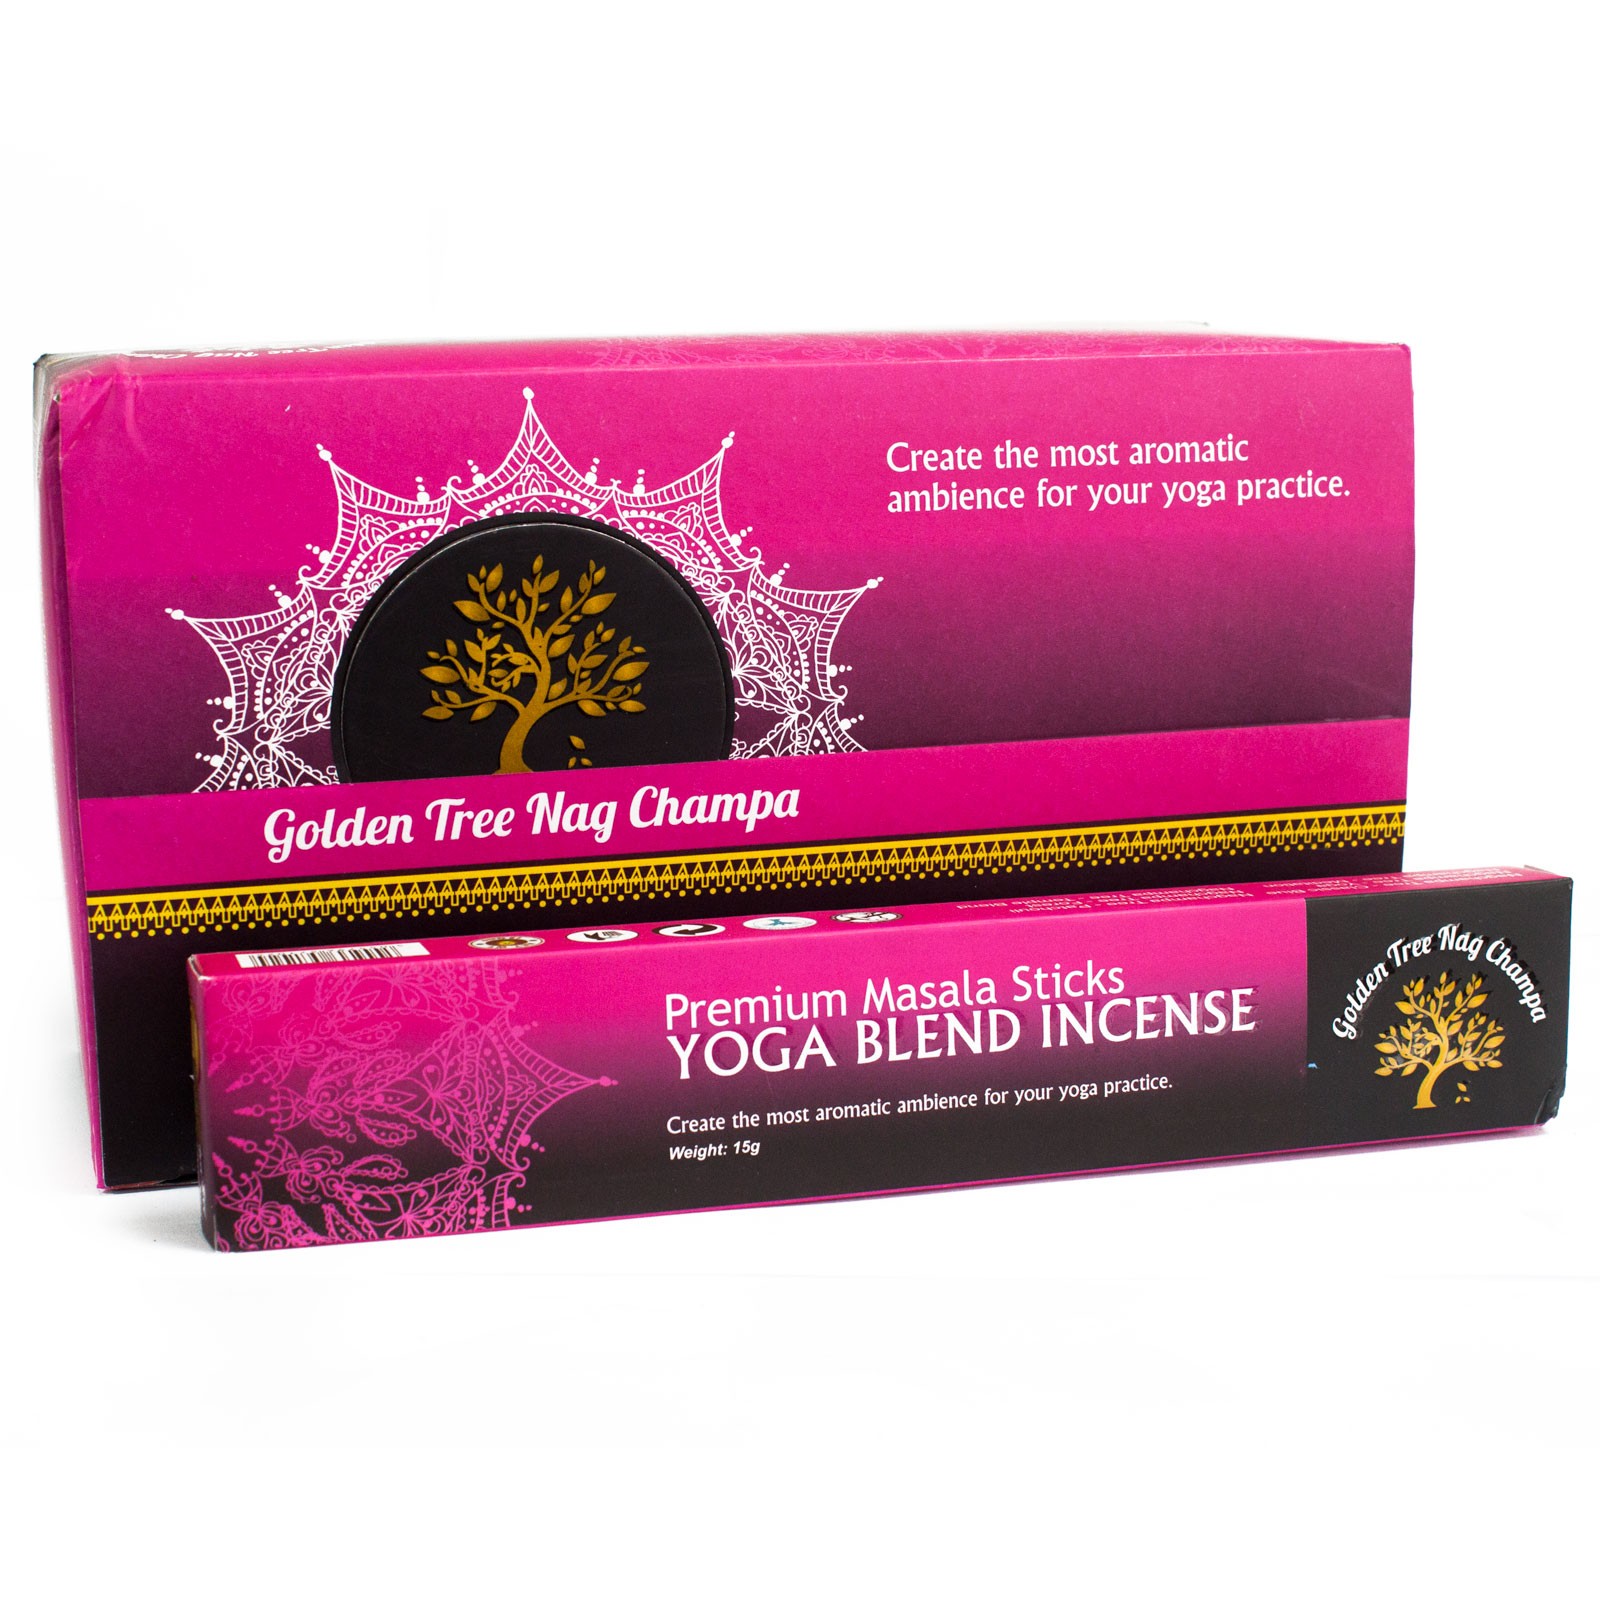 4 x Packs Golden Tree Nag Champa Incense - Yoga Blend